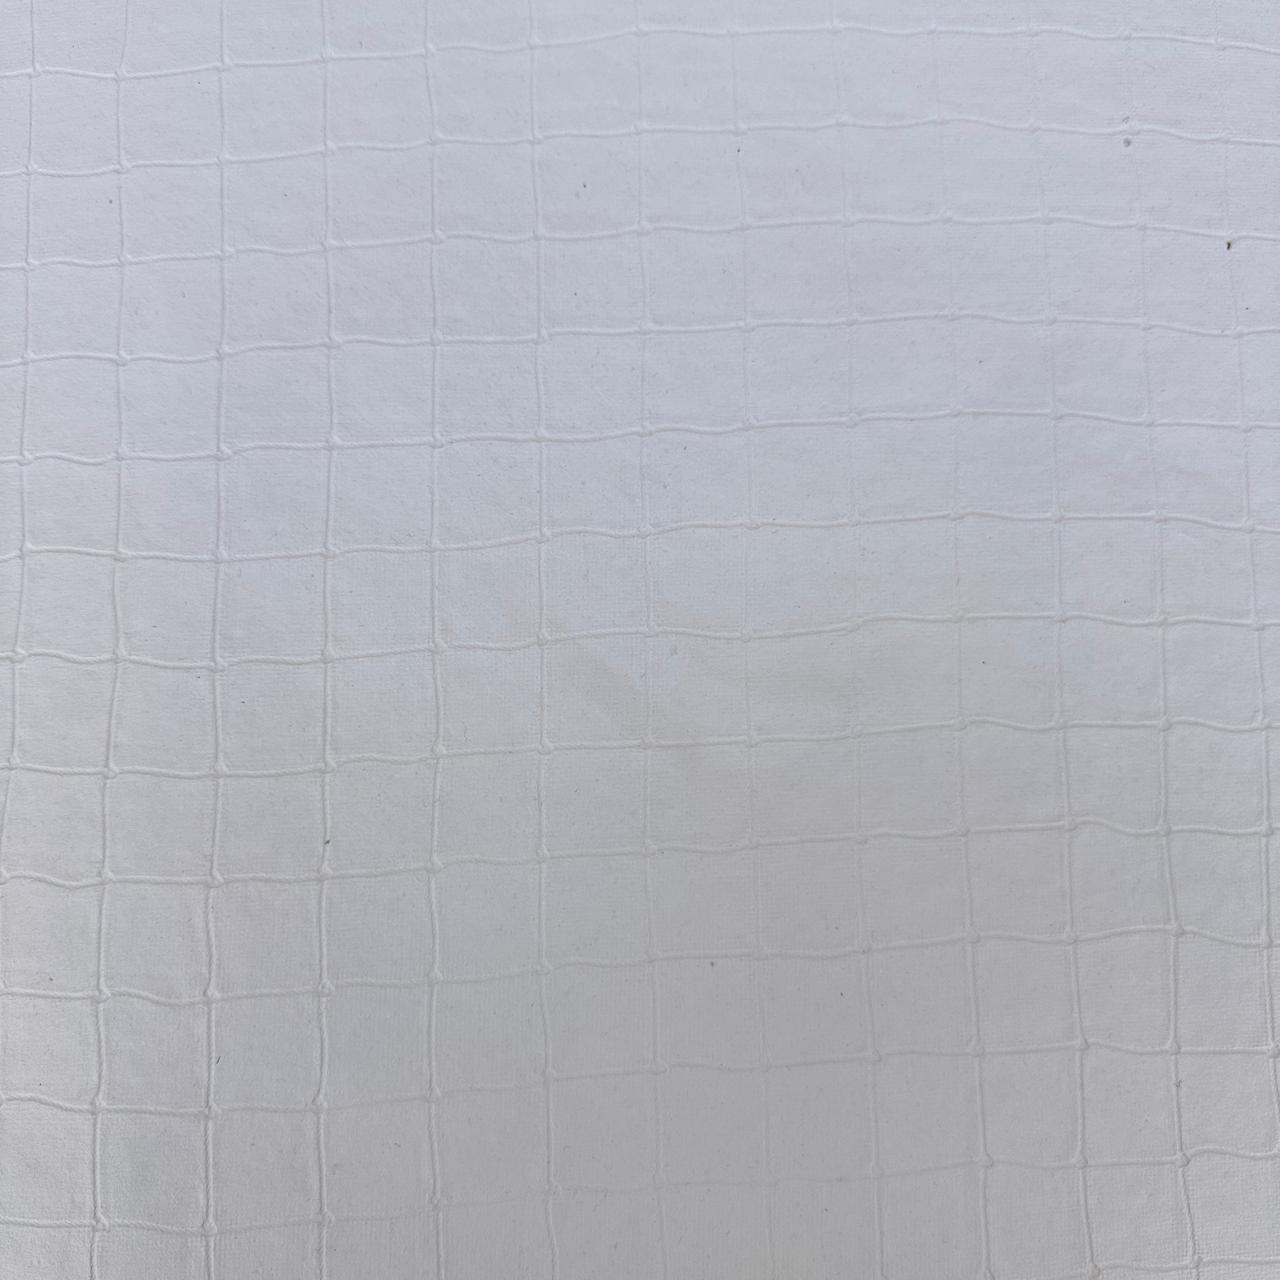 Square Texture Handmade paper 